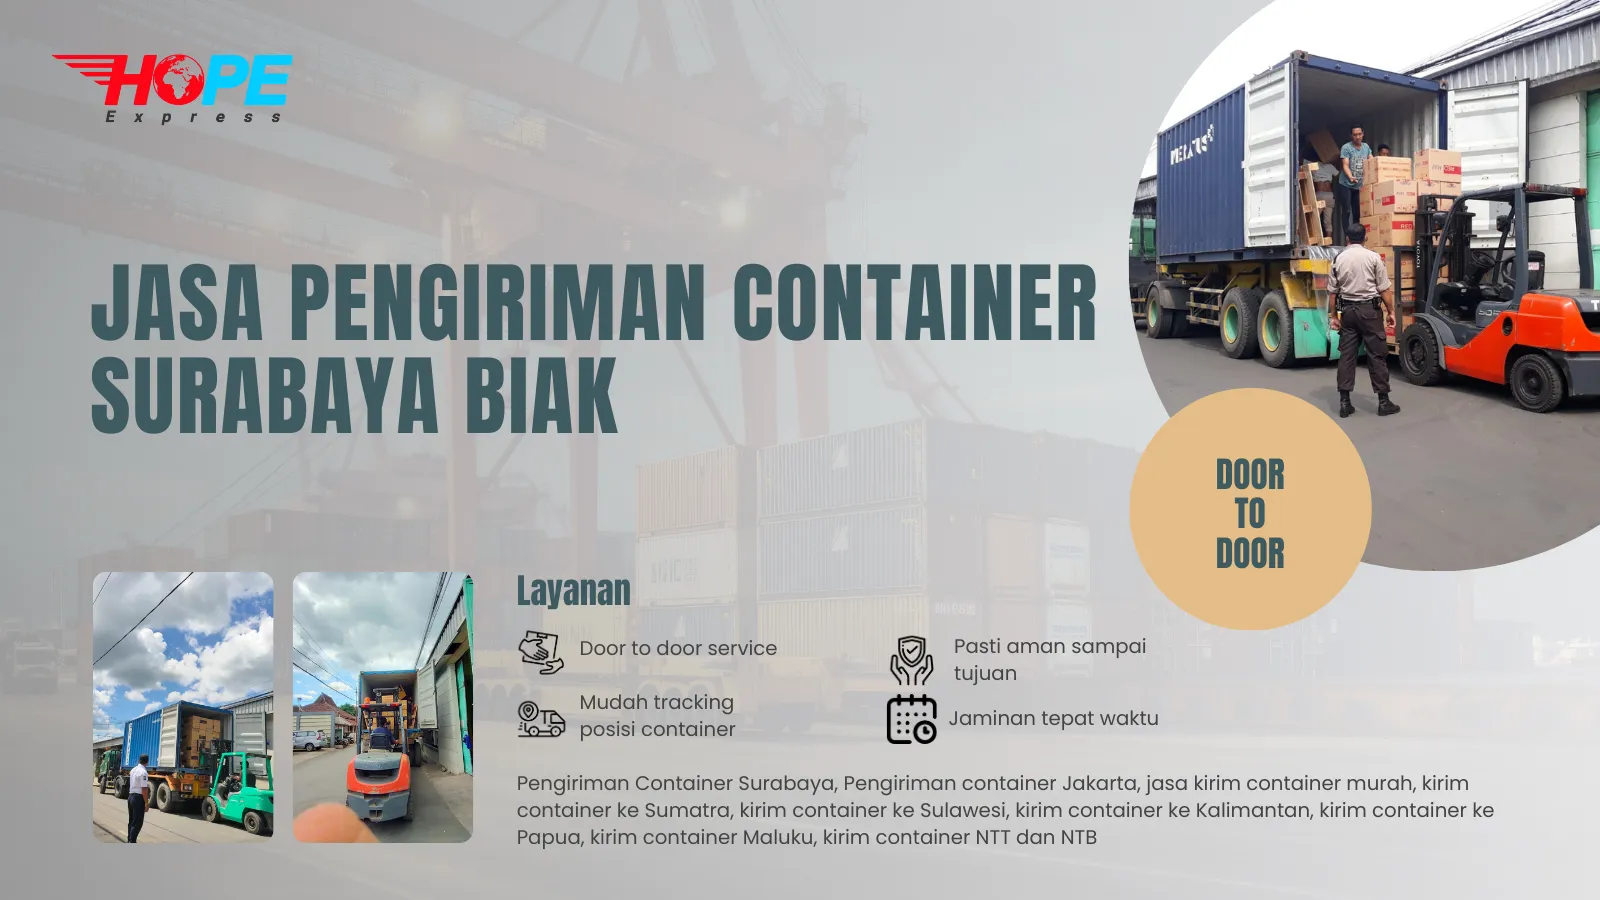 Jasa Pengiriman Container Surabaya Biak